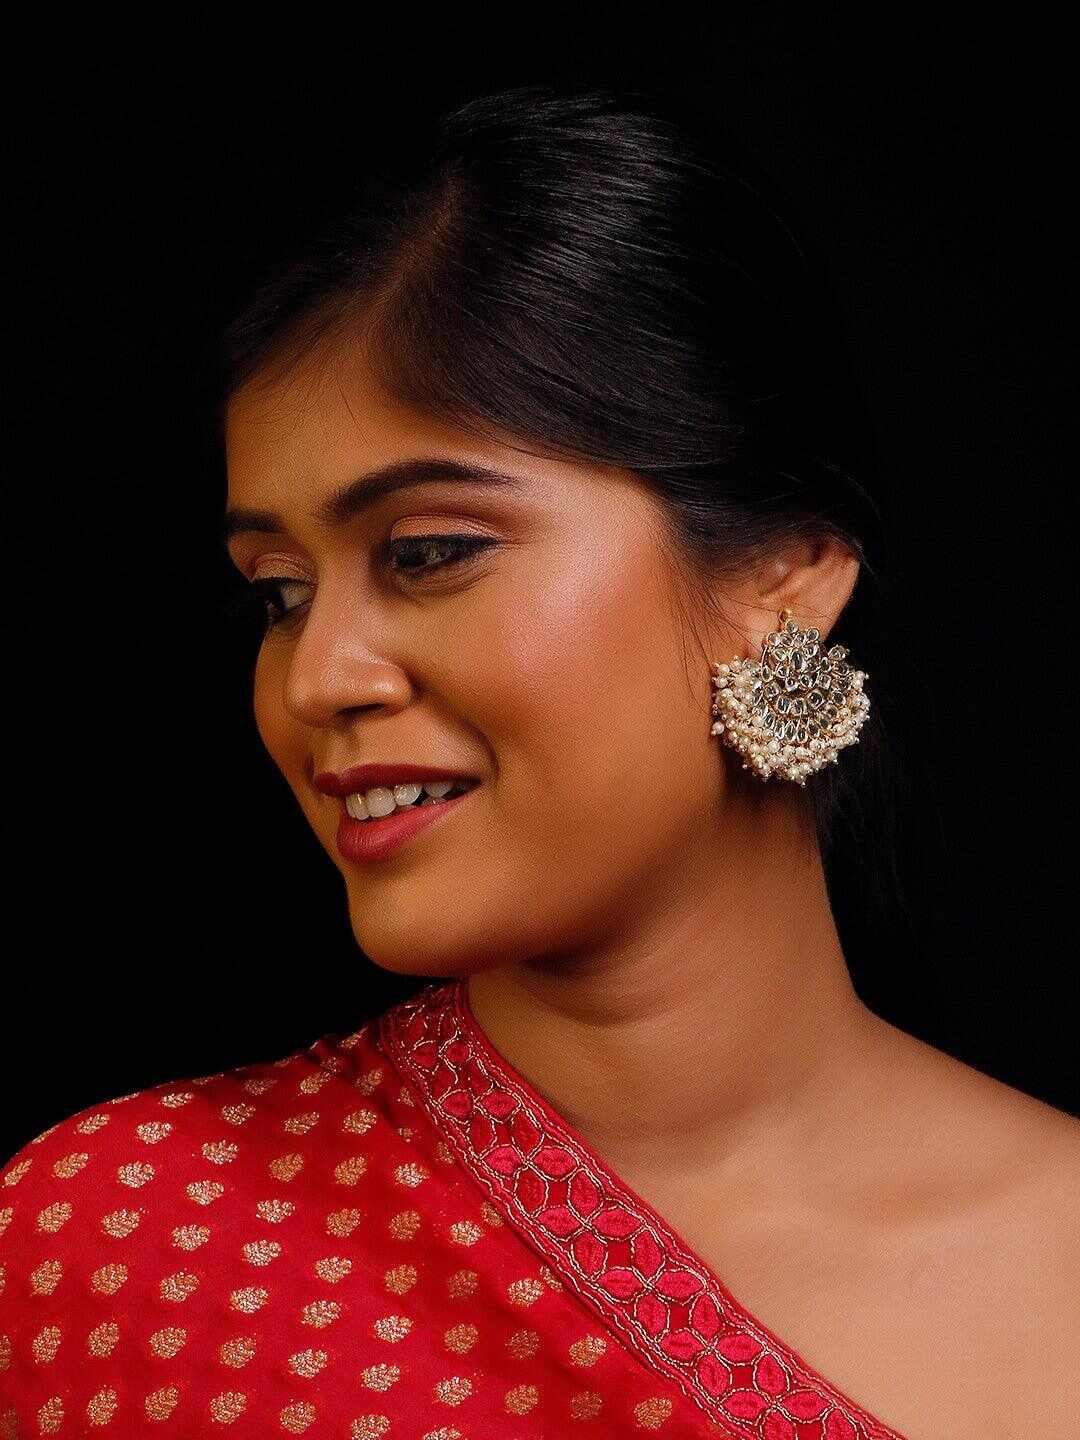 Ishhaara Saiee M Manjrekar in Chandbali Motif Earrings